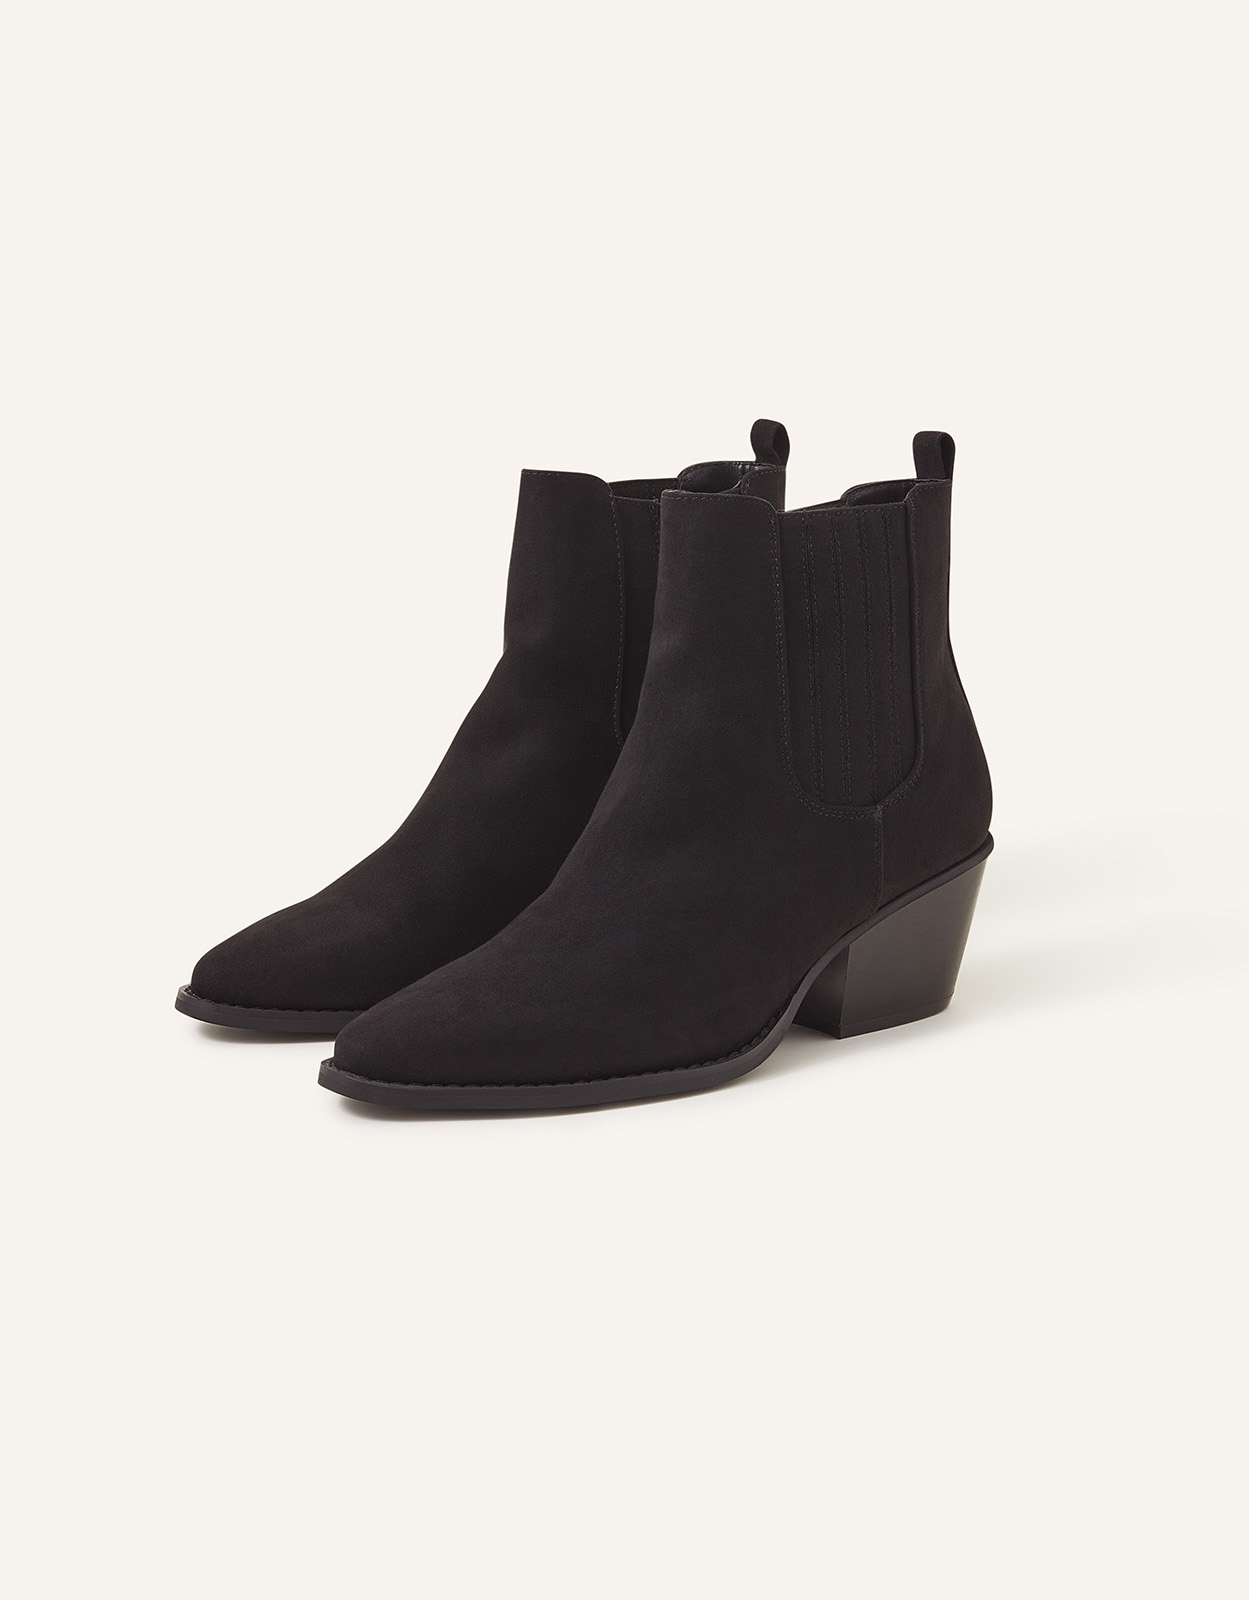 Accessorize Women's Western Boots Black, Size: 37